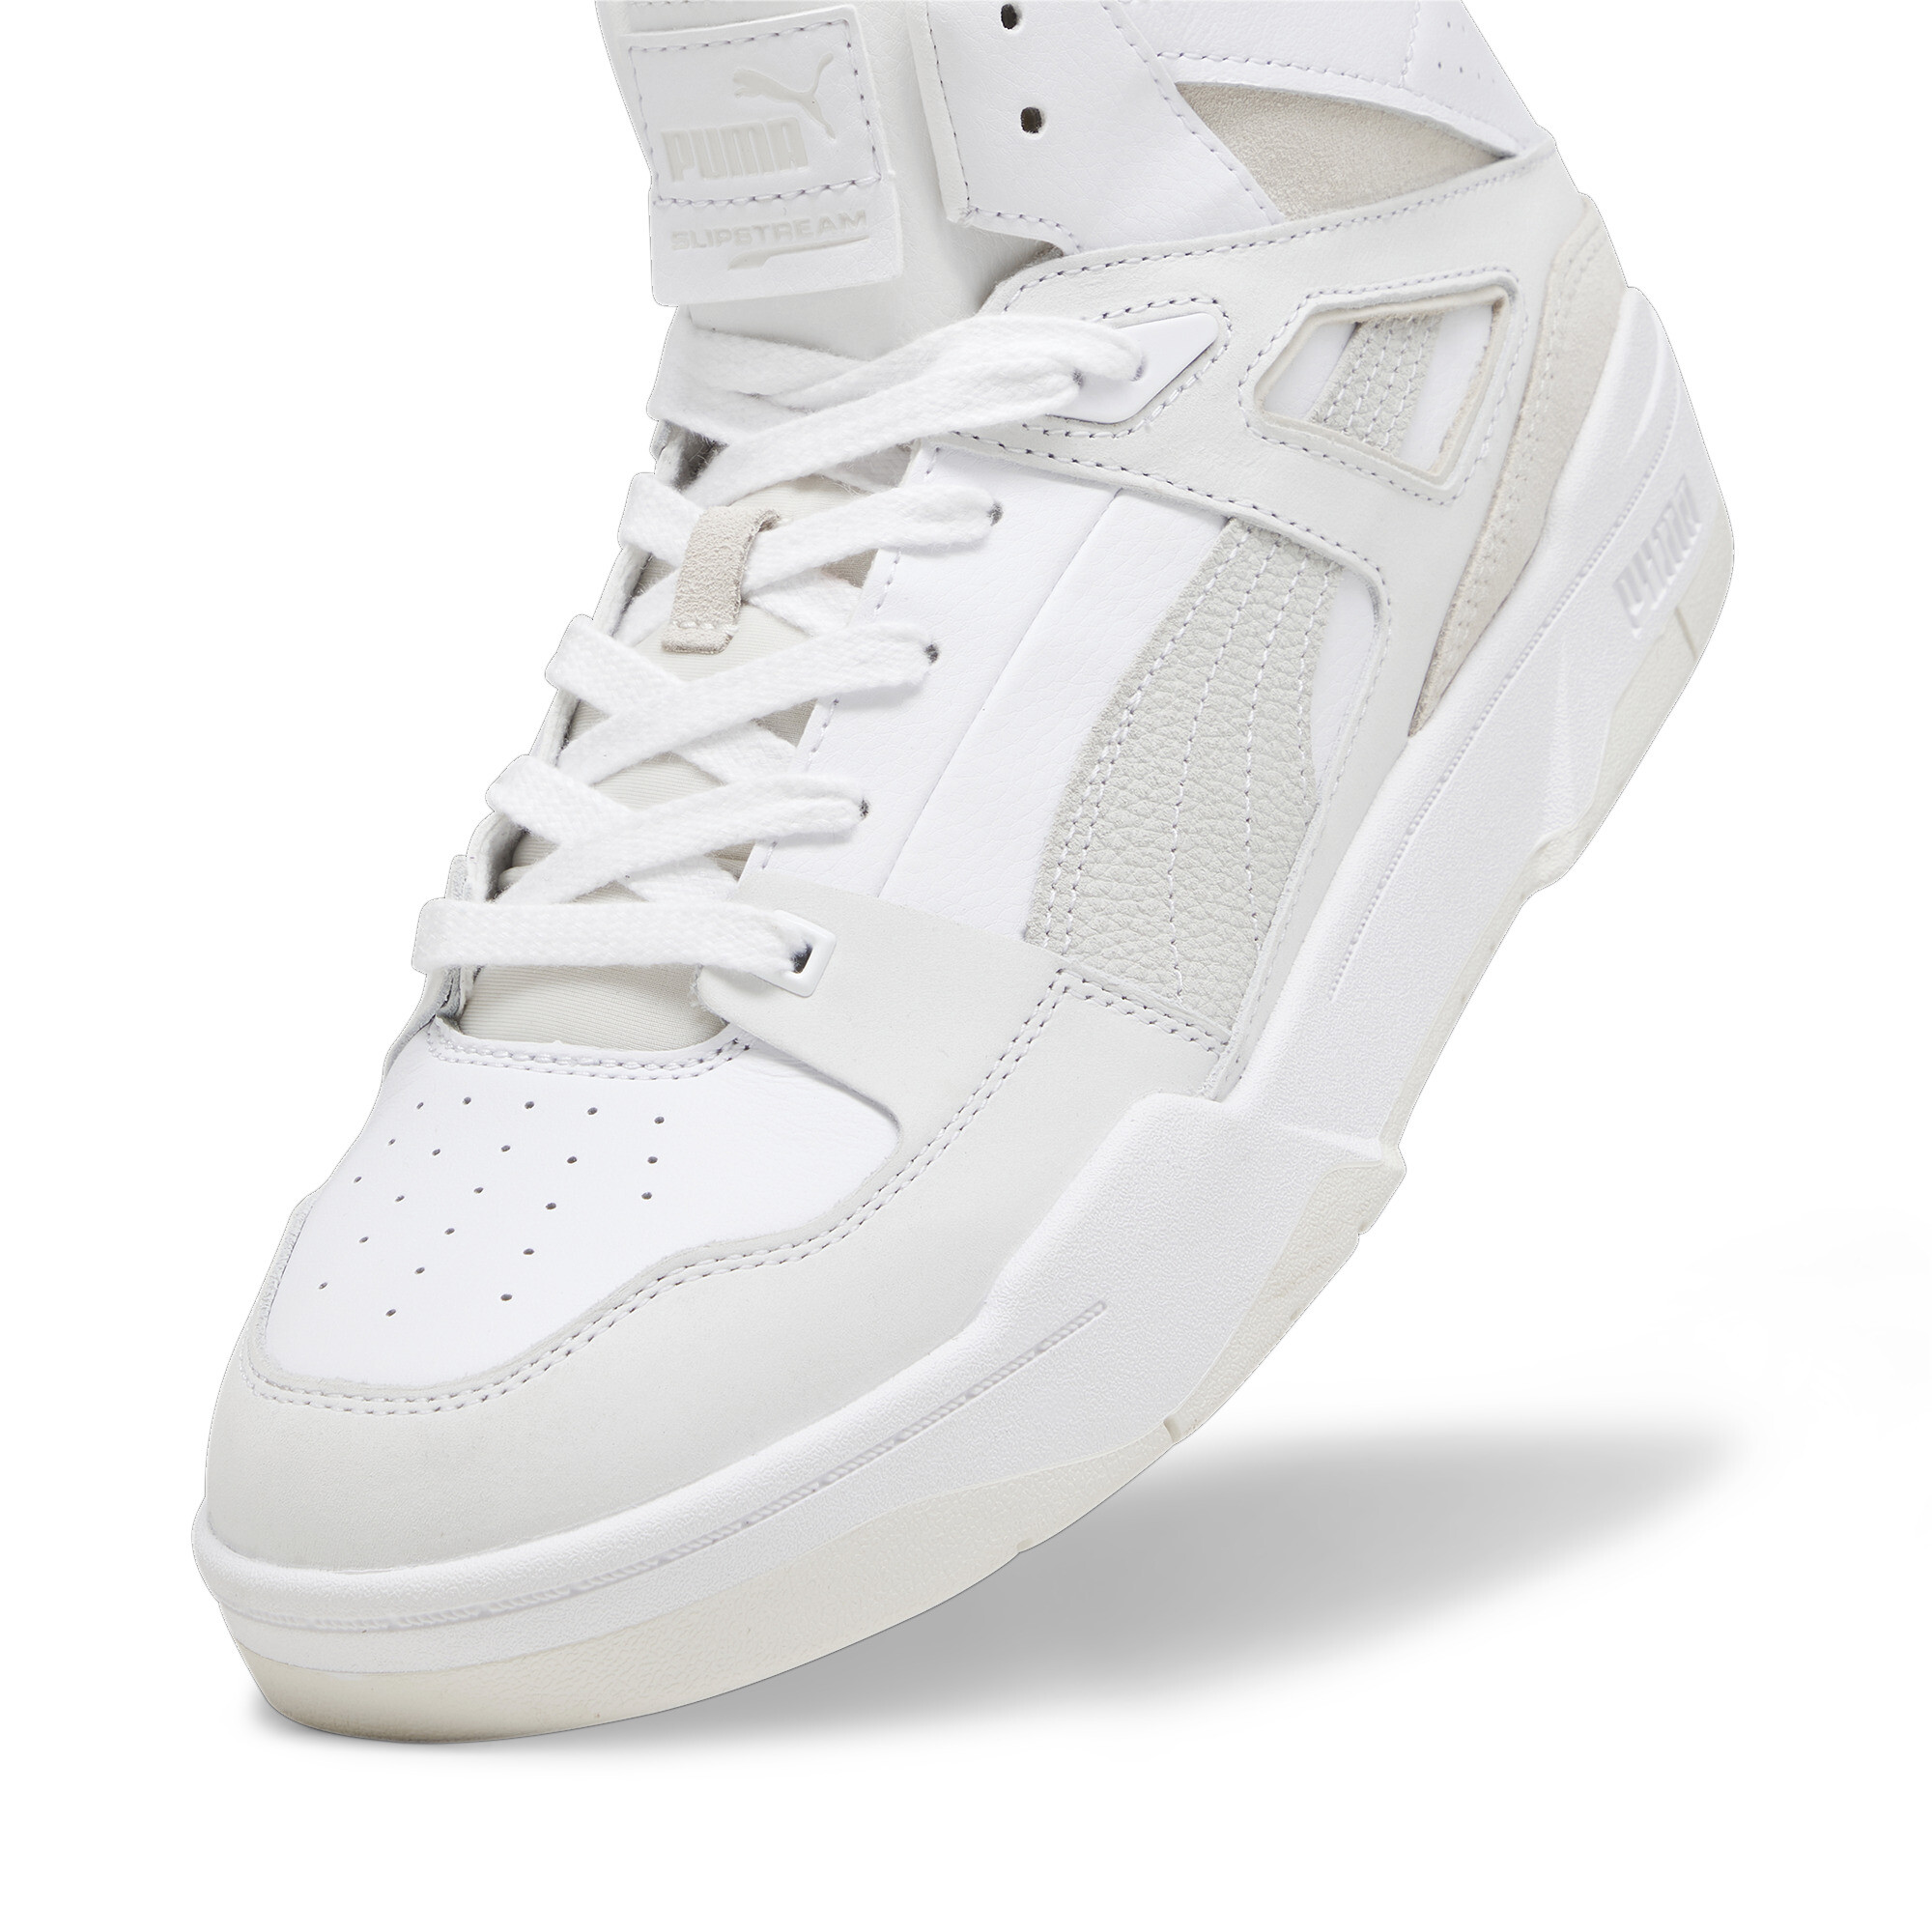 Puma Slipstream Hi Lux II Sneakers, White, Size 37, Shoes